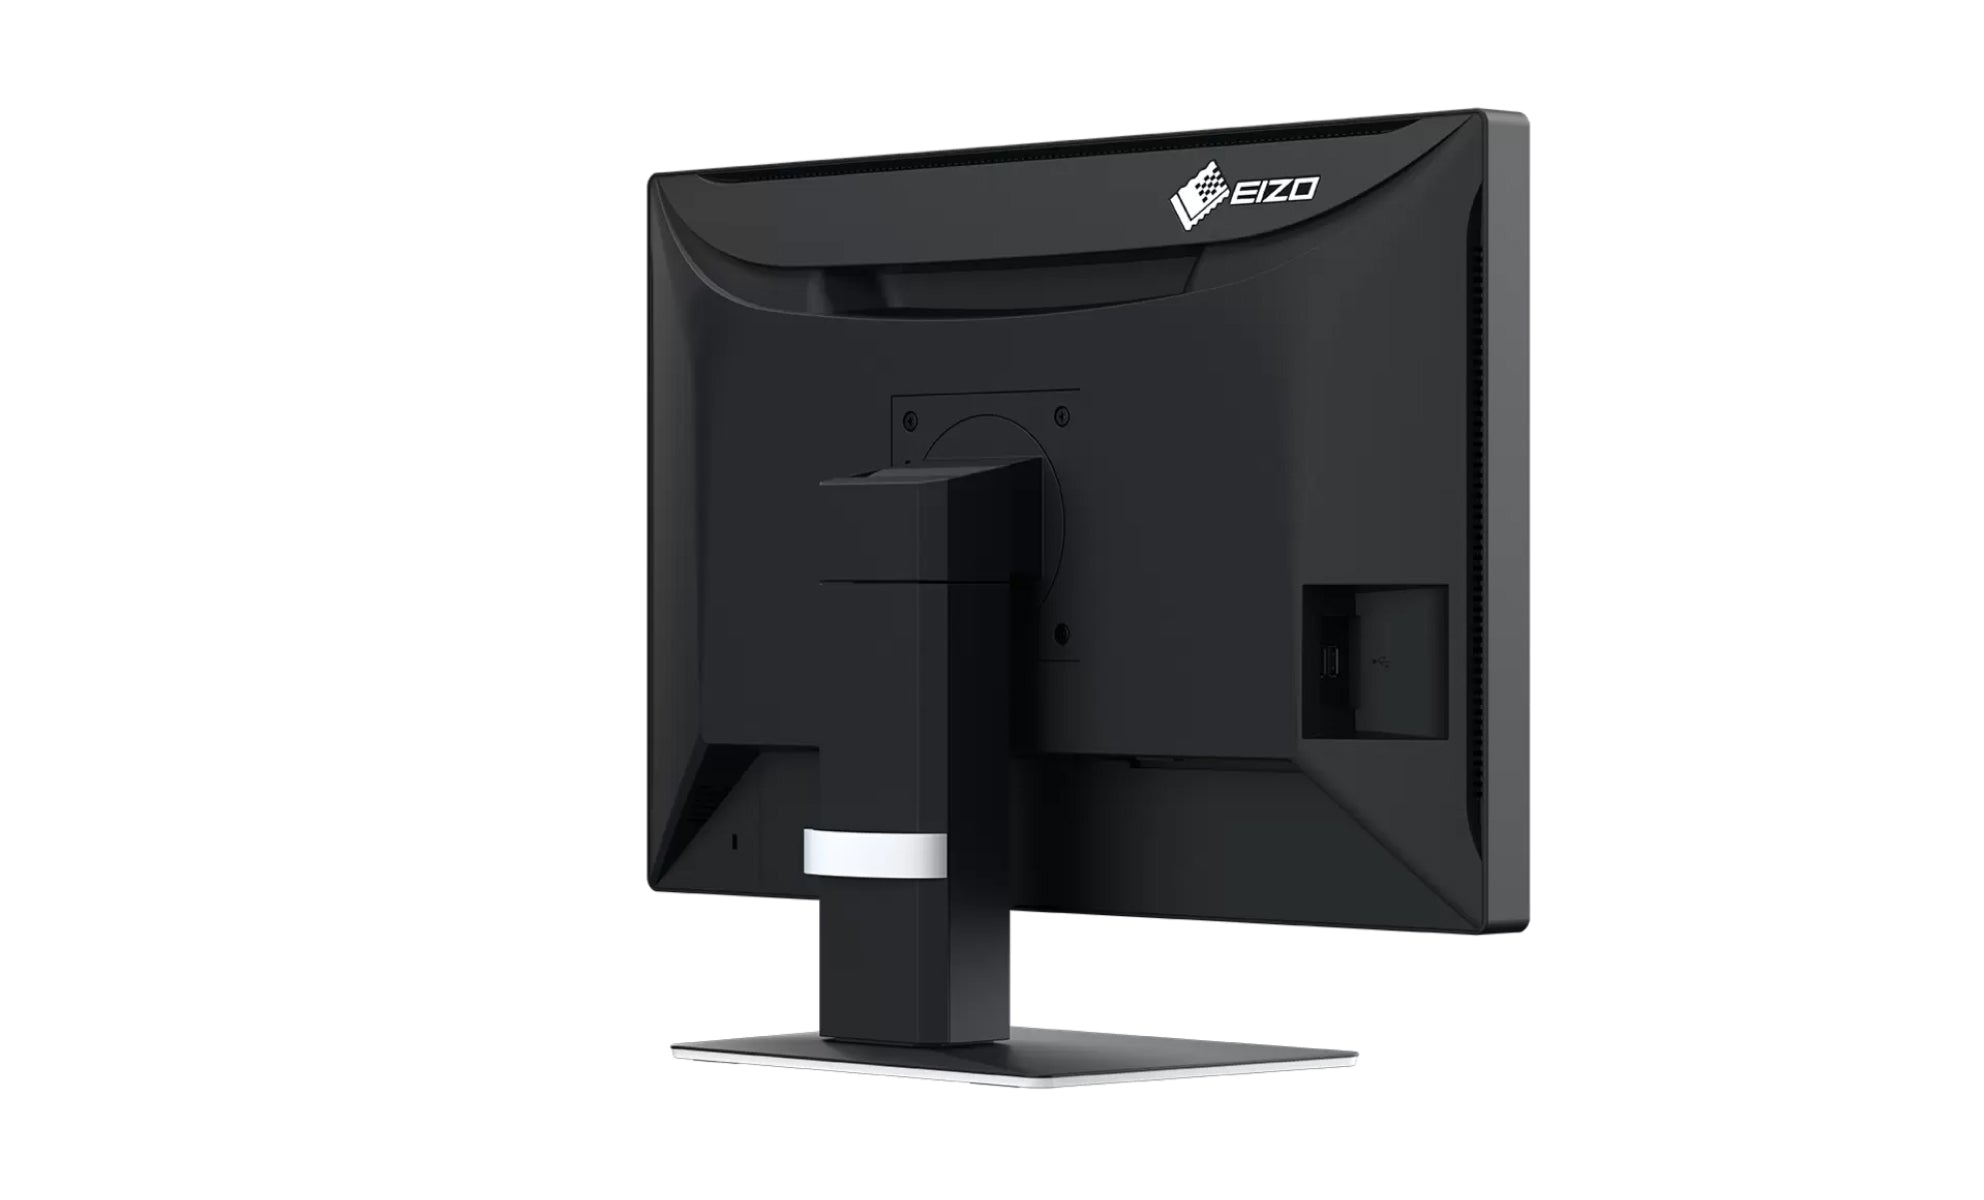 Eizo RadiForce MX243W 2.3MP 24" Color LED Clinical Review Display (MX243W) Monitors.com 